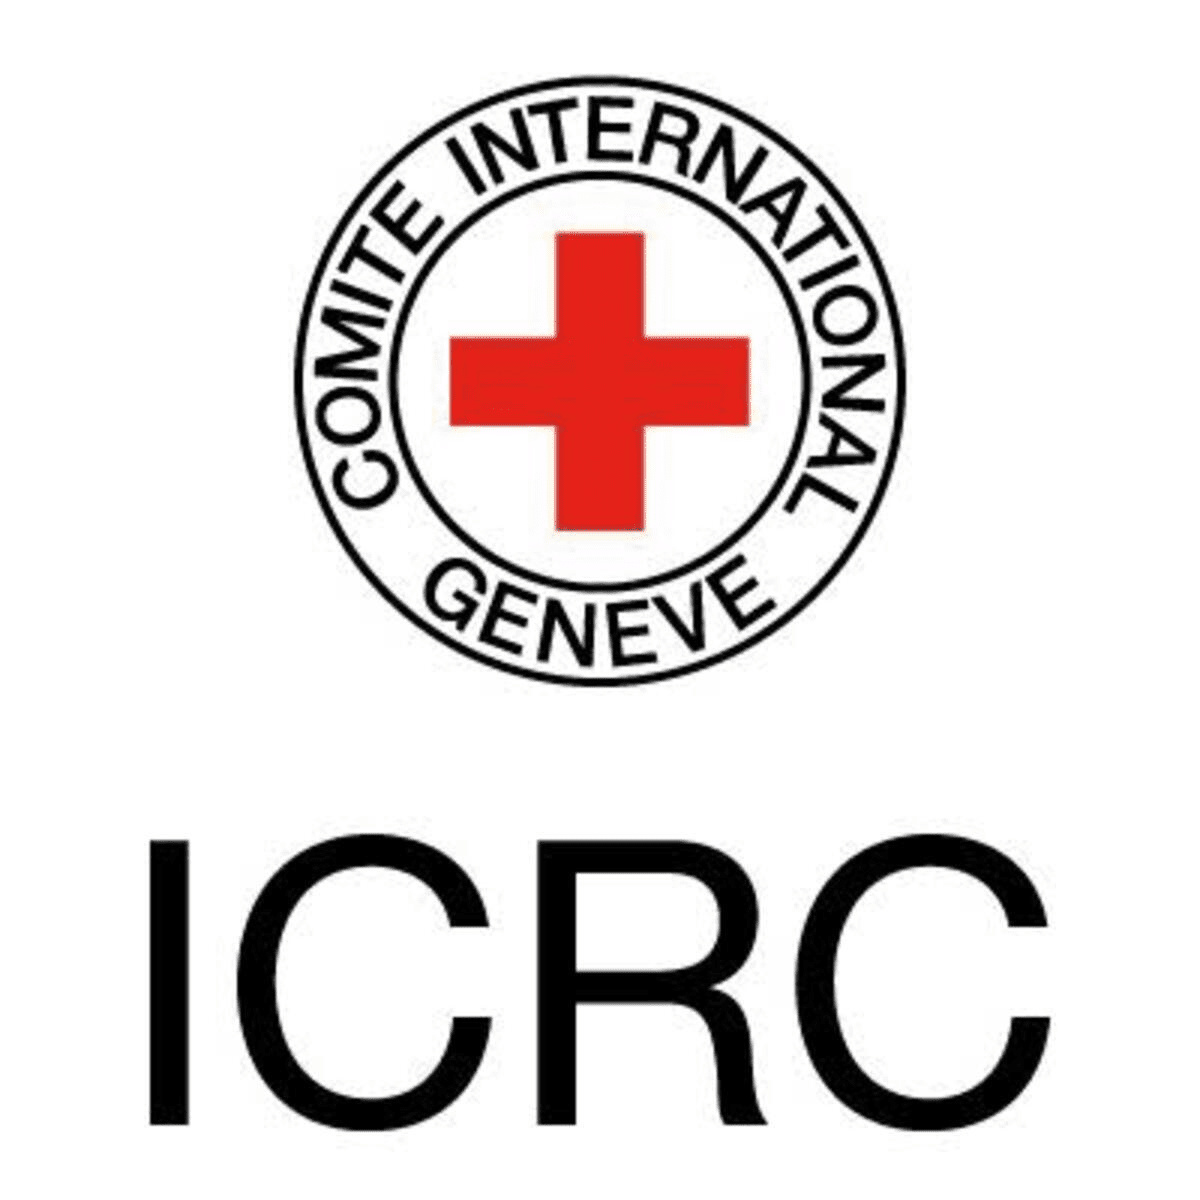 Job Opportunities at ICRC 2022, Ajira Mpya ICRC, ICRC internship 2022, ICRC salary scale, ICRC jobs Geneva, ICRC recruitment process